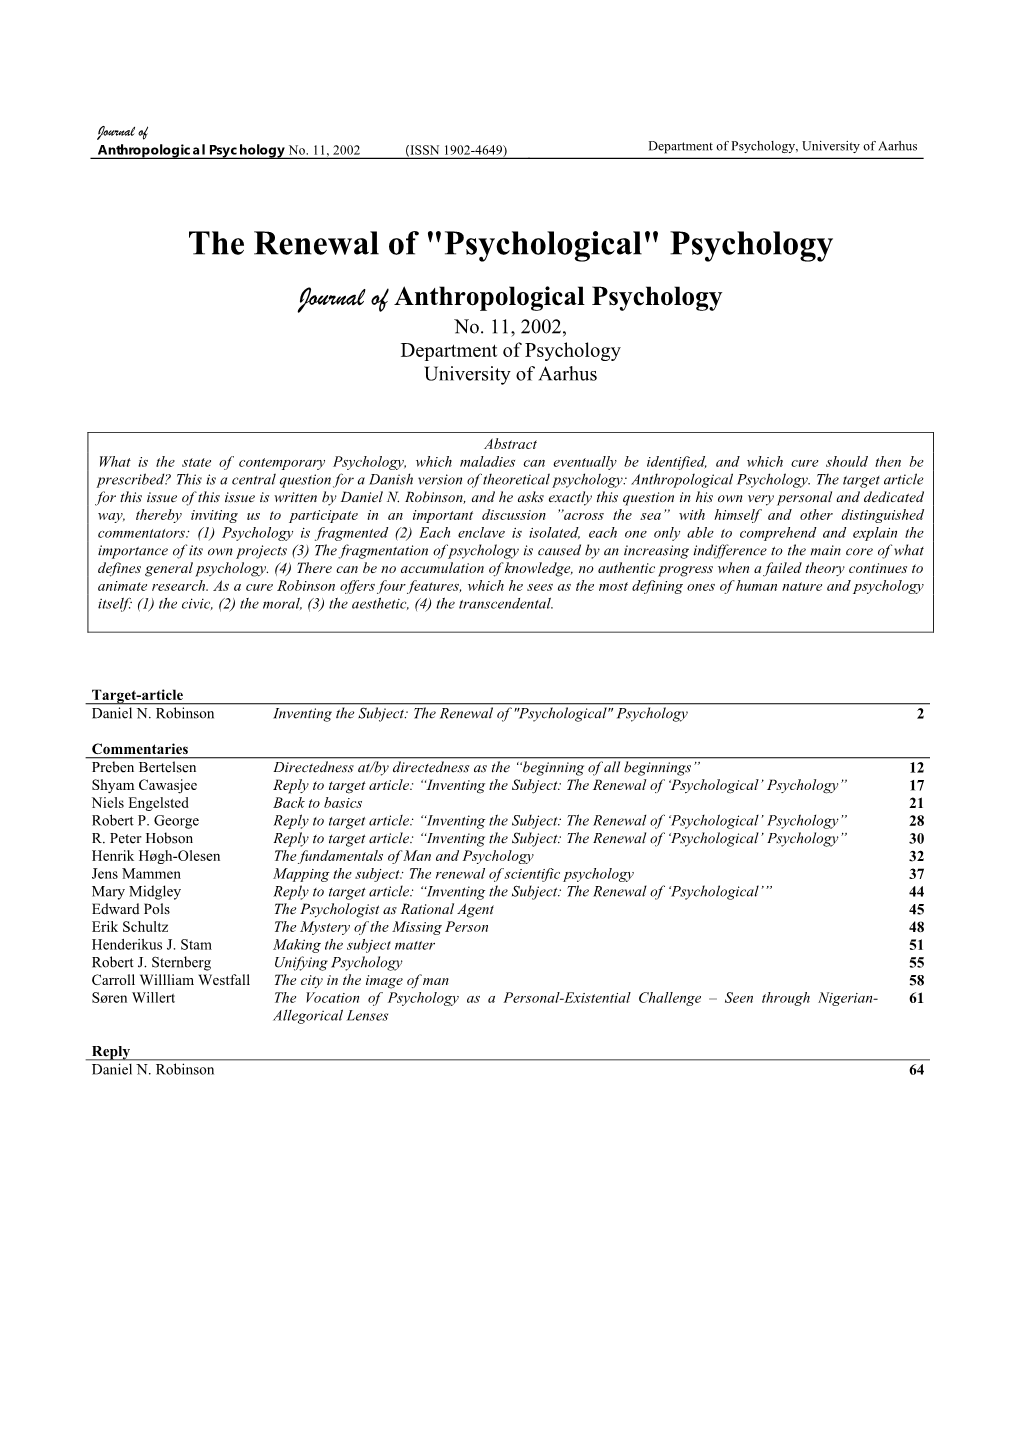 The Renewal of "Psychological" Psychology